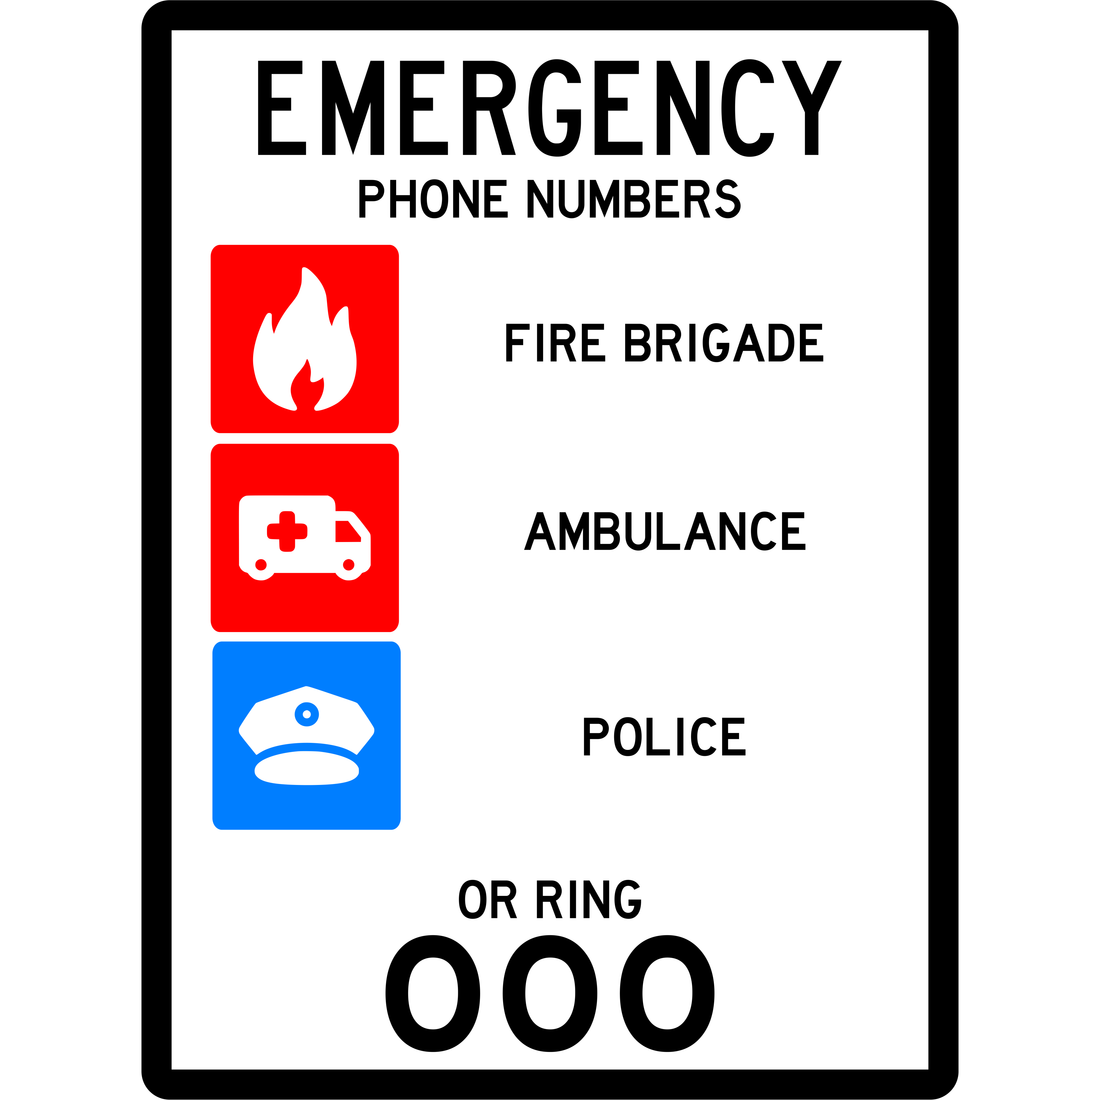 GENERAL - EMERGENCY PHONE NUMBERS SIGN